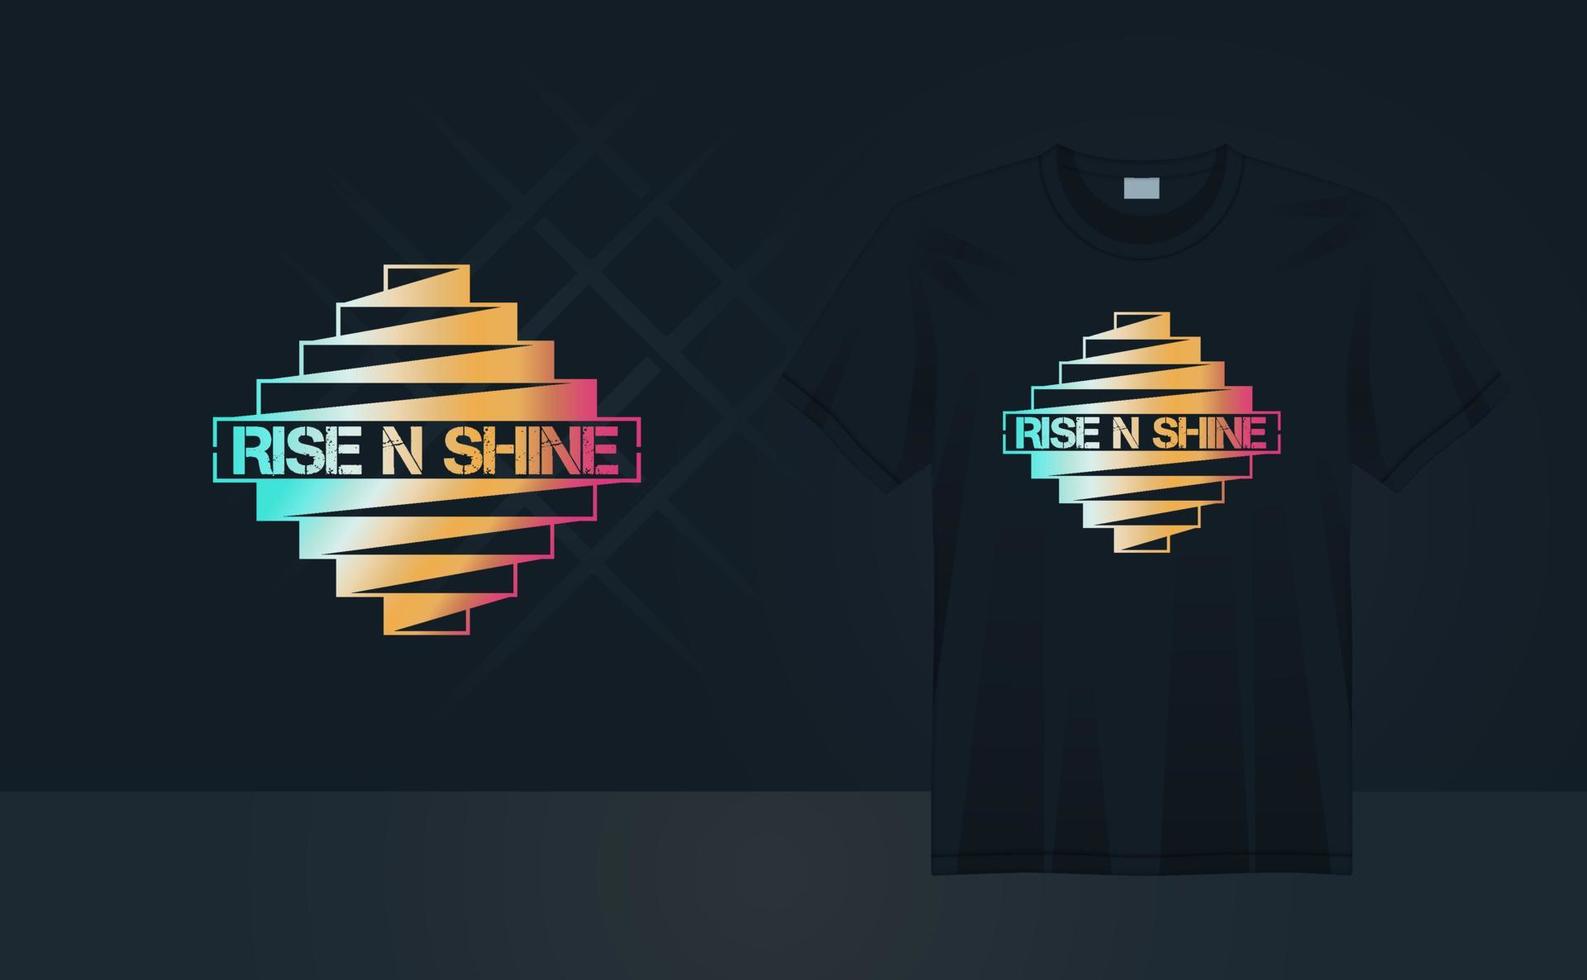 Rise n Shine - vintage grunge t-shirt design for T-shirt printing, clothing fashion, Poster, Wall art. vector illustration art for T-shirt.